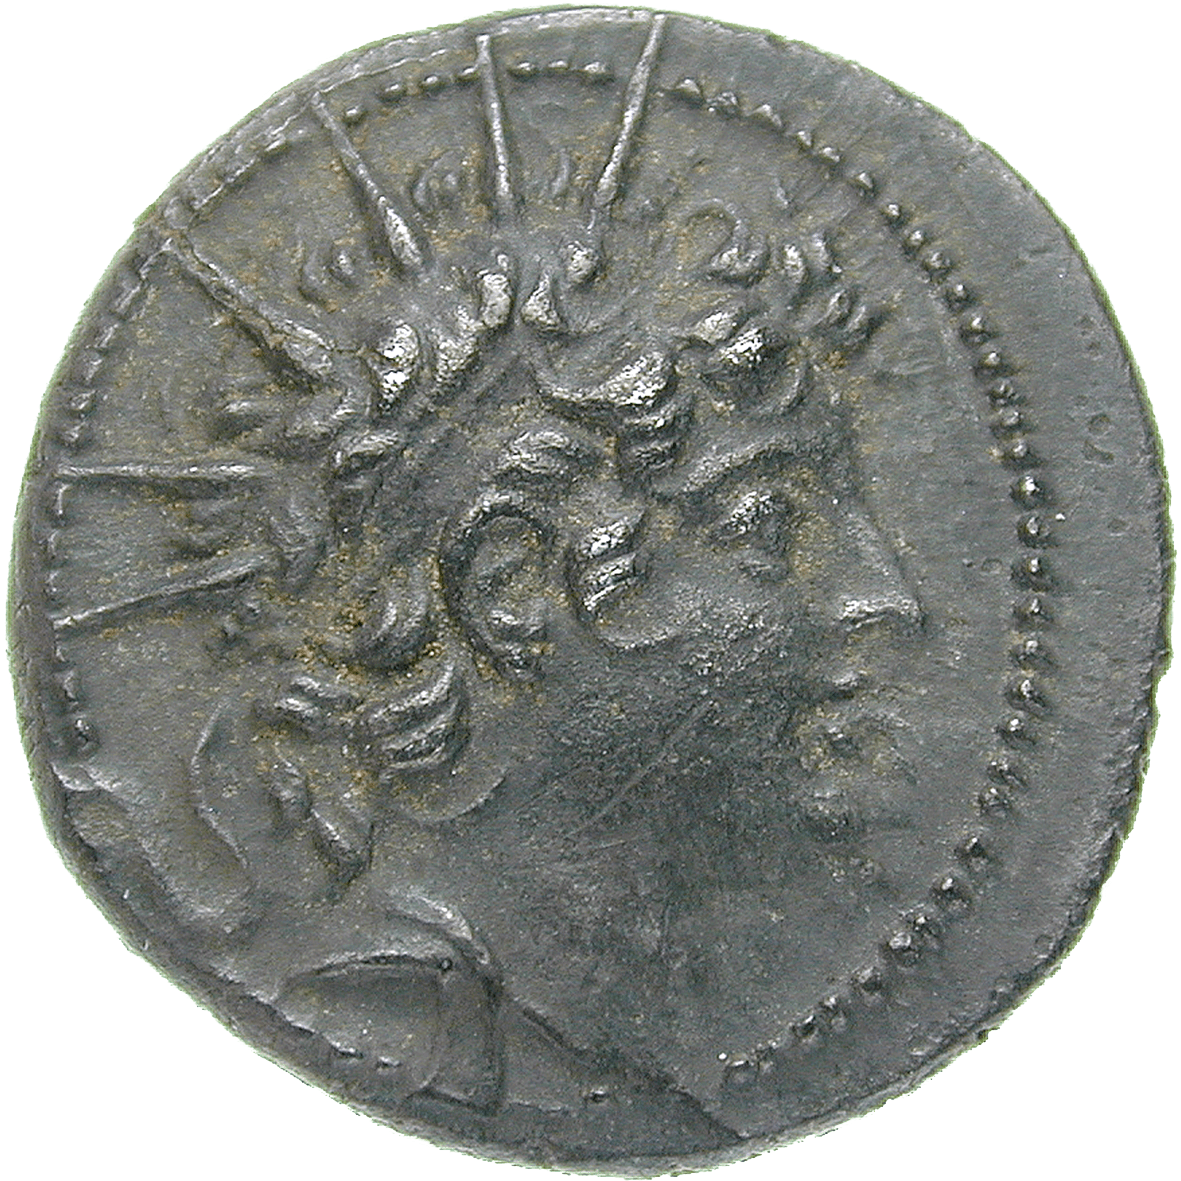 Seleukidenreich, Antiochos VI. Epiphanes, Drachme (obverse)